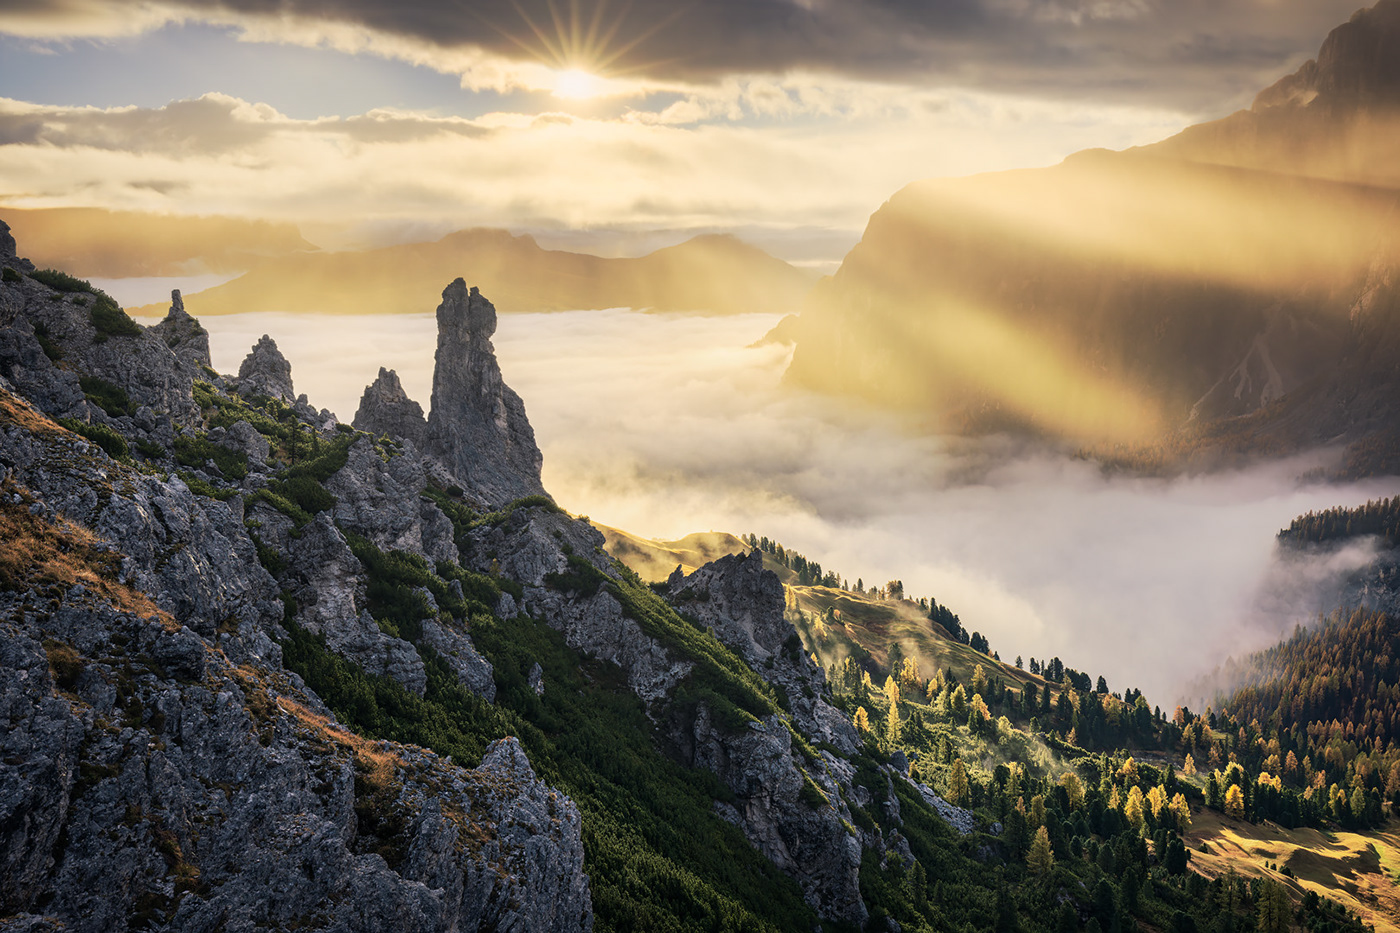 Alpen dolomites Italy hiking adventure mountains Landscape Nature outdoors Travel